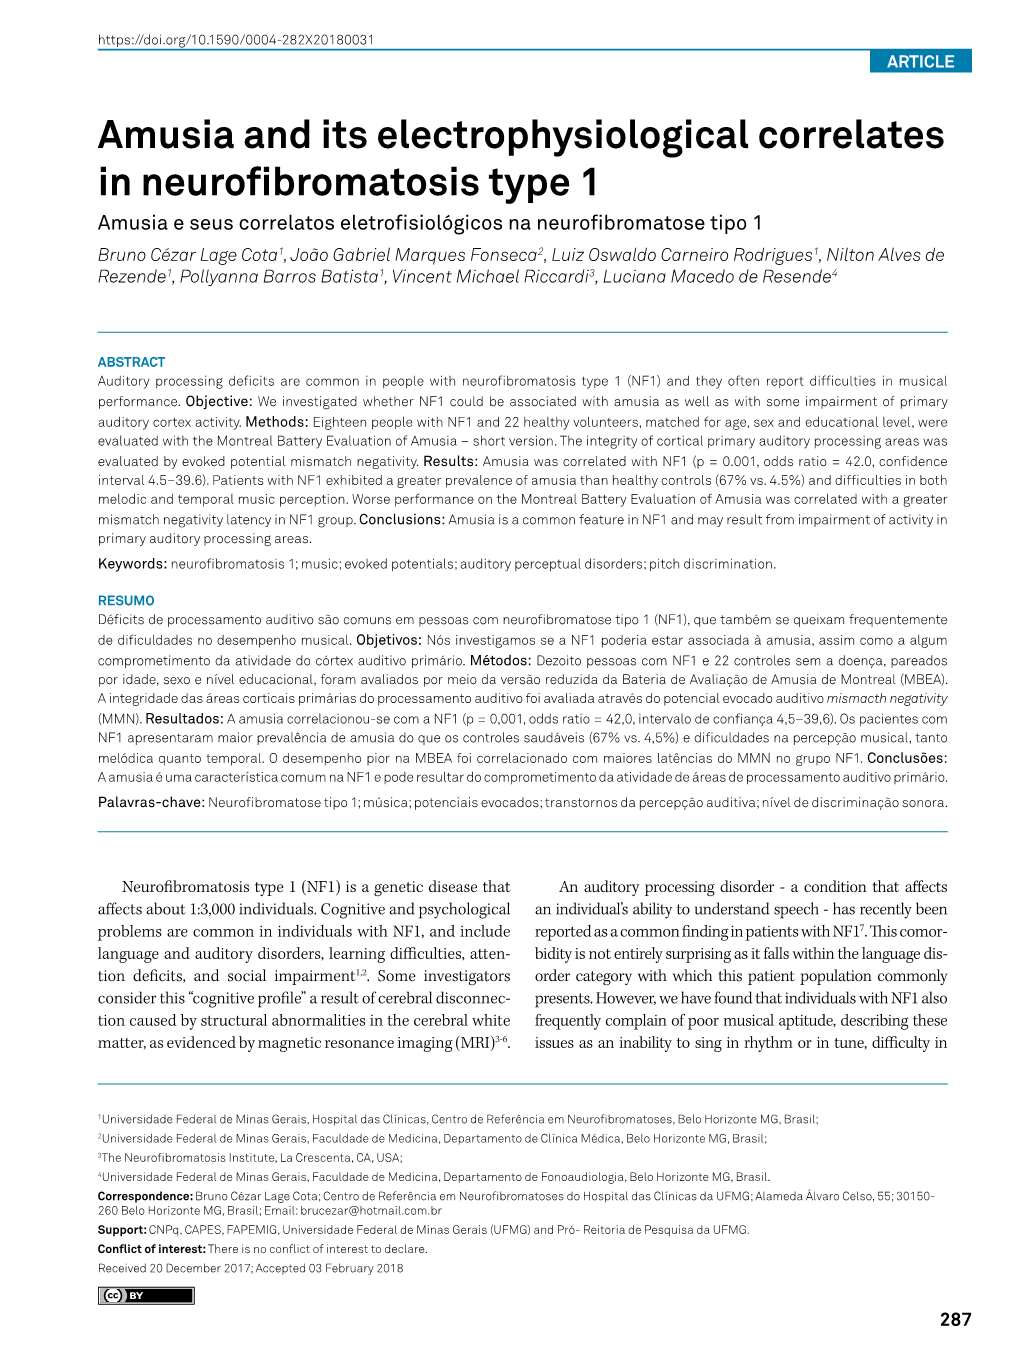 Amusia and Its Electrophysiological Correlates in Neurofibromatosis Type 1